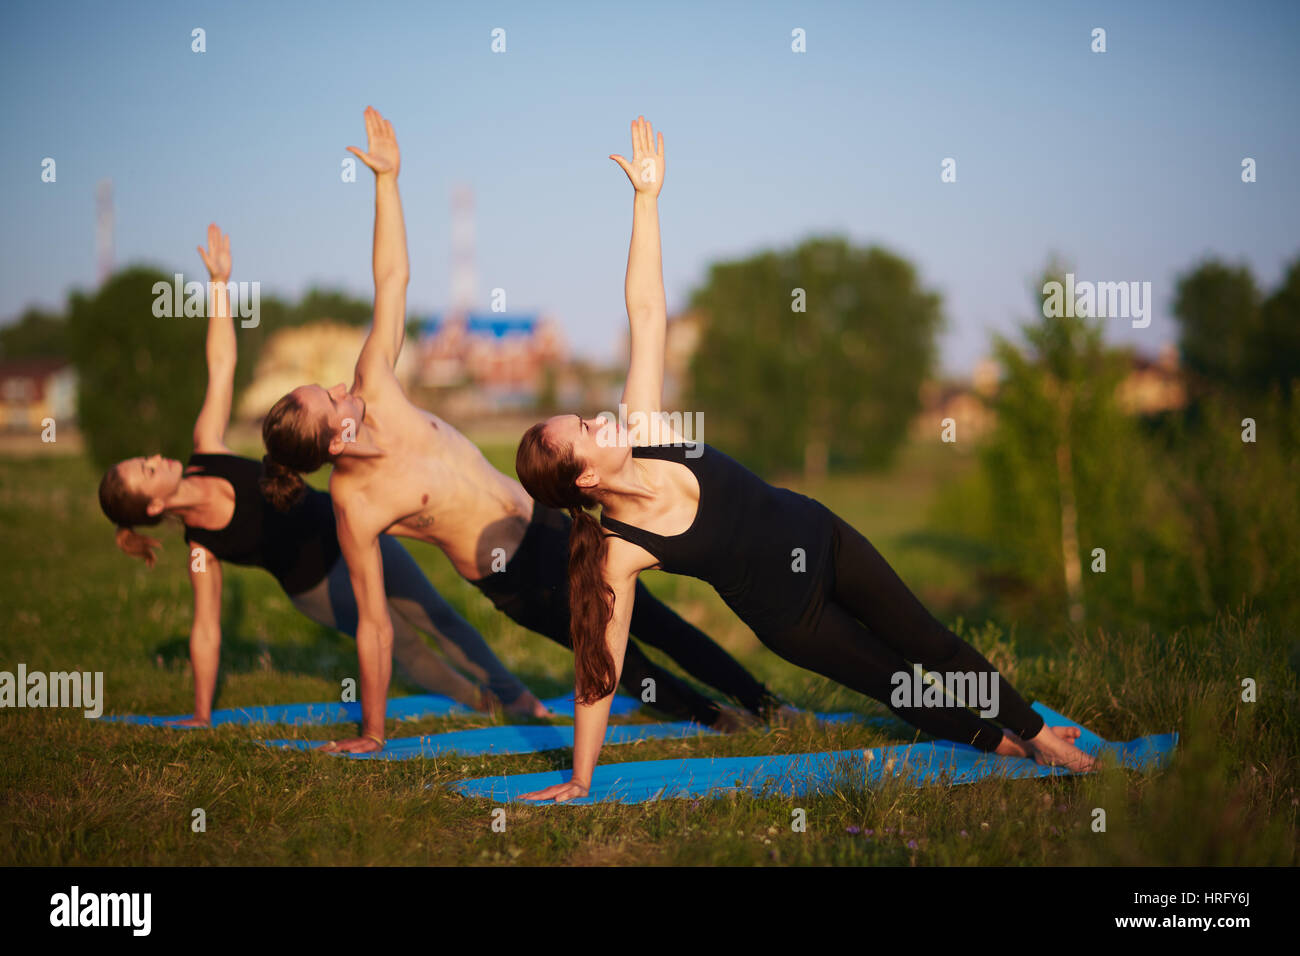 Difficult yoga Stock Photos, Royalty Free Difficult yoga Images |  Depositphotos